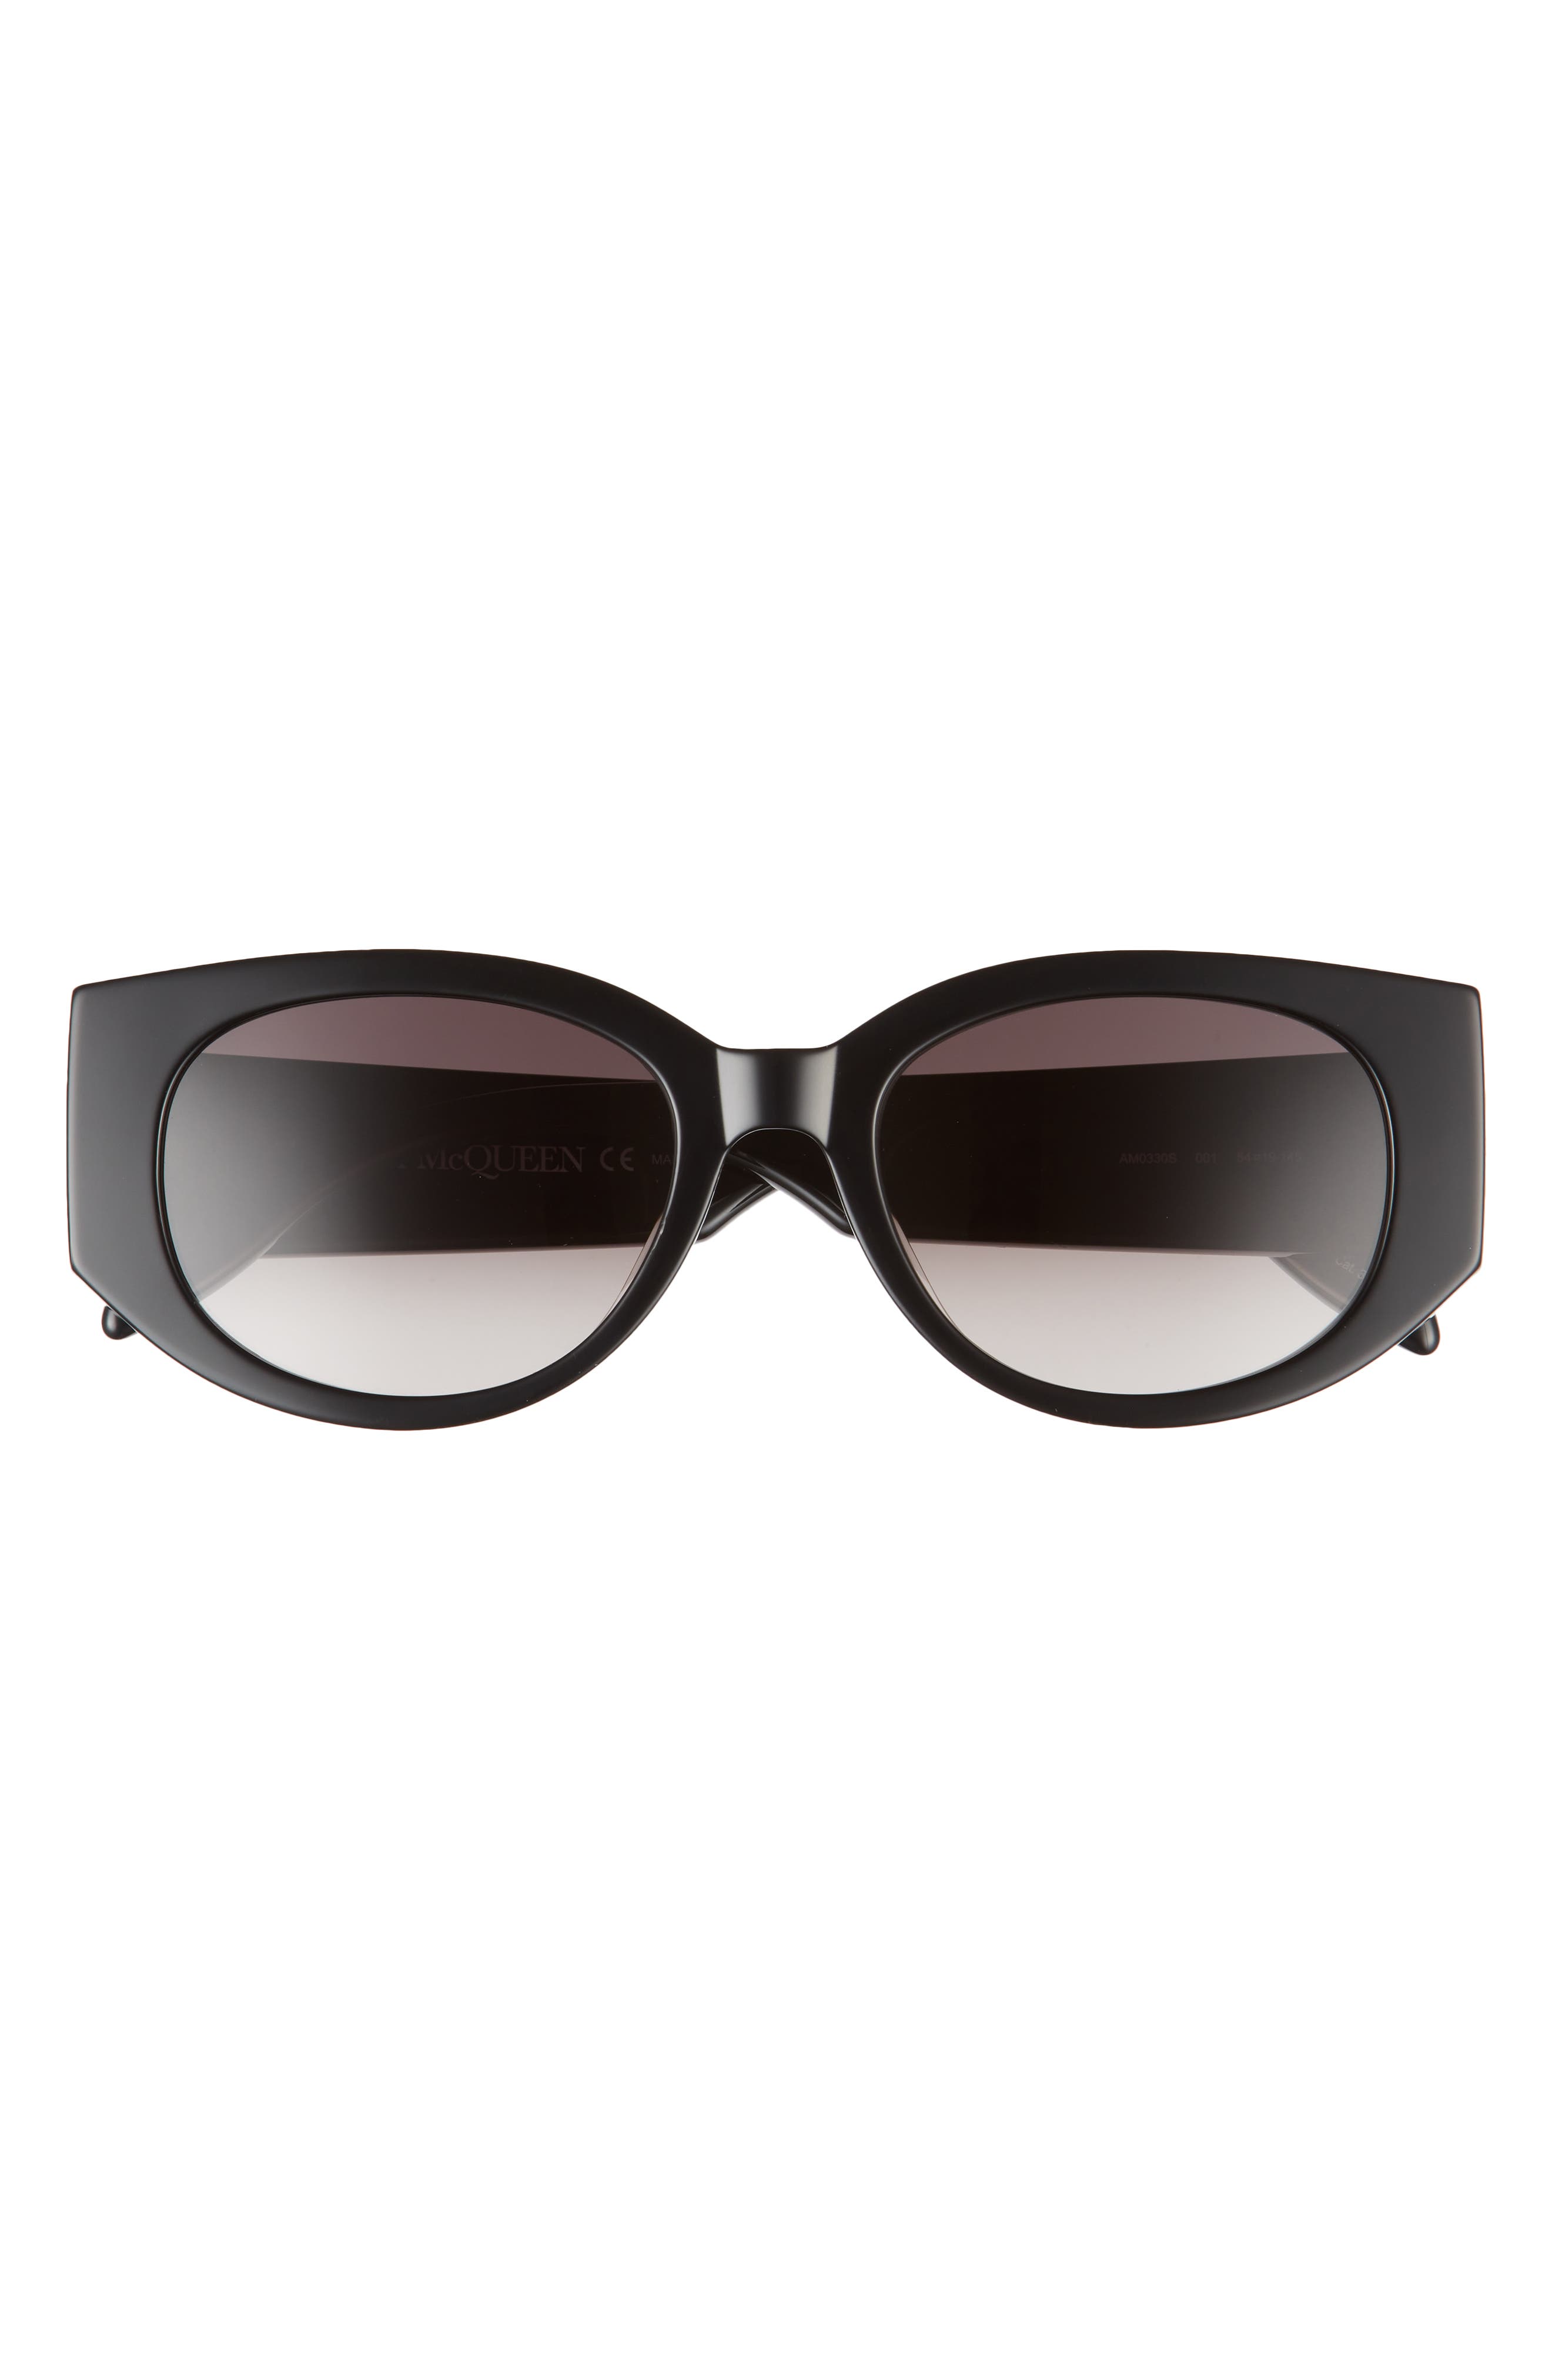 Alexander McQueen 54mm Rectangular Sunglasses in Black/White at Nordstrom